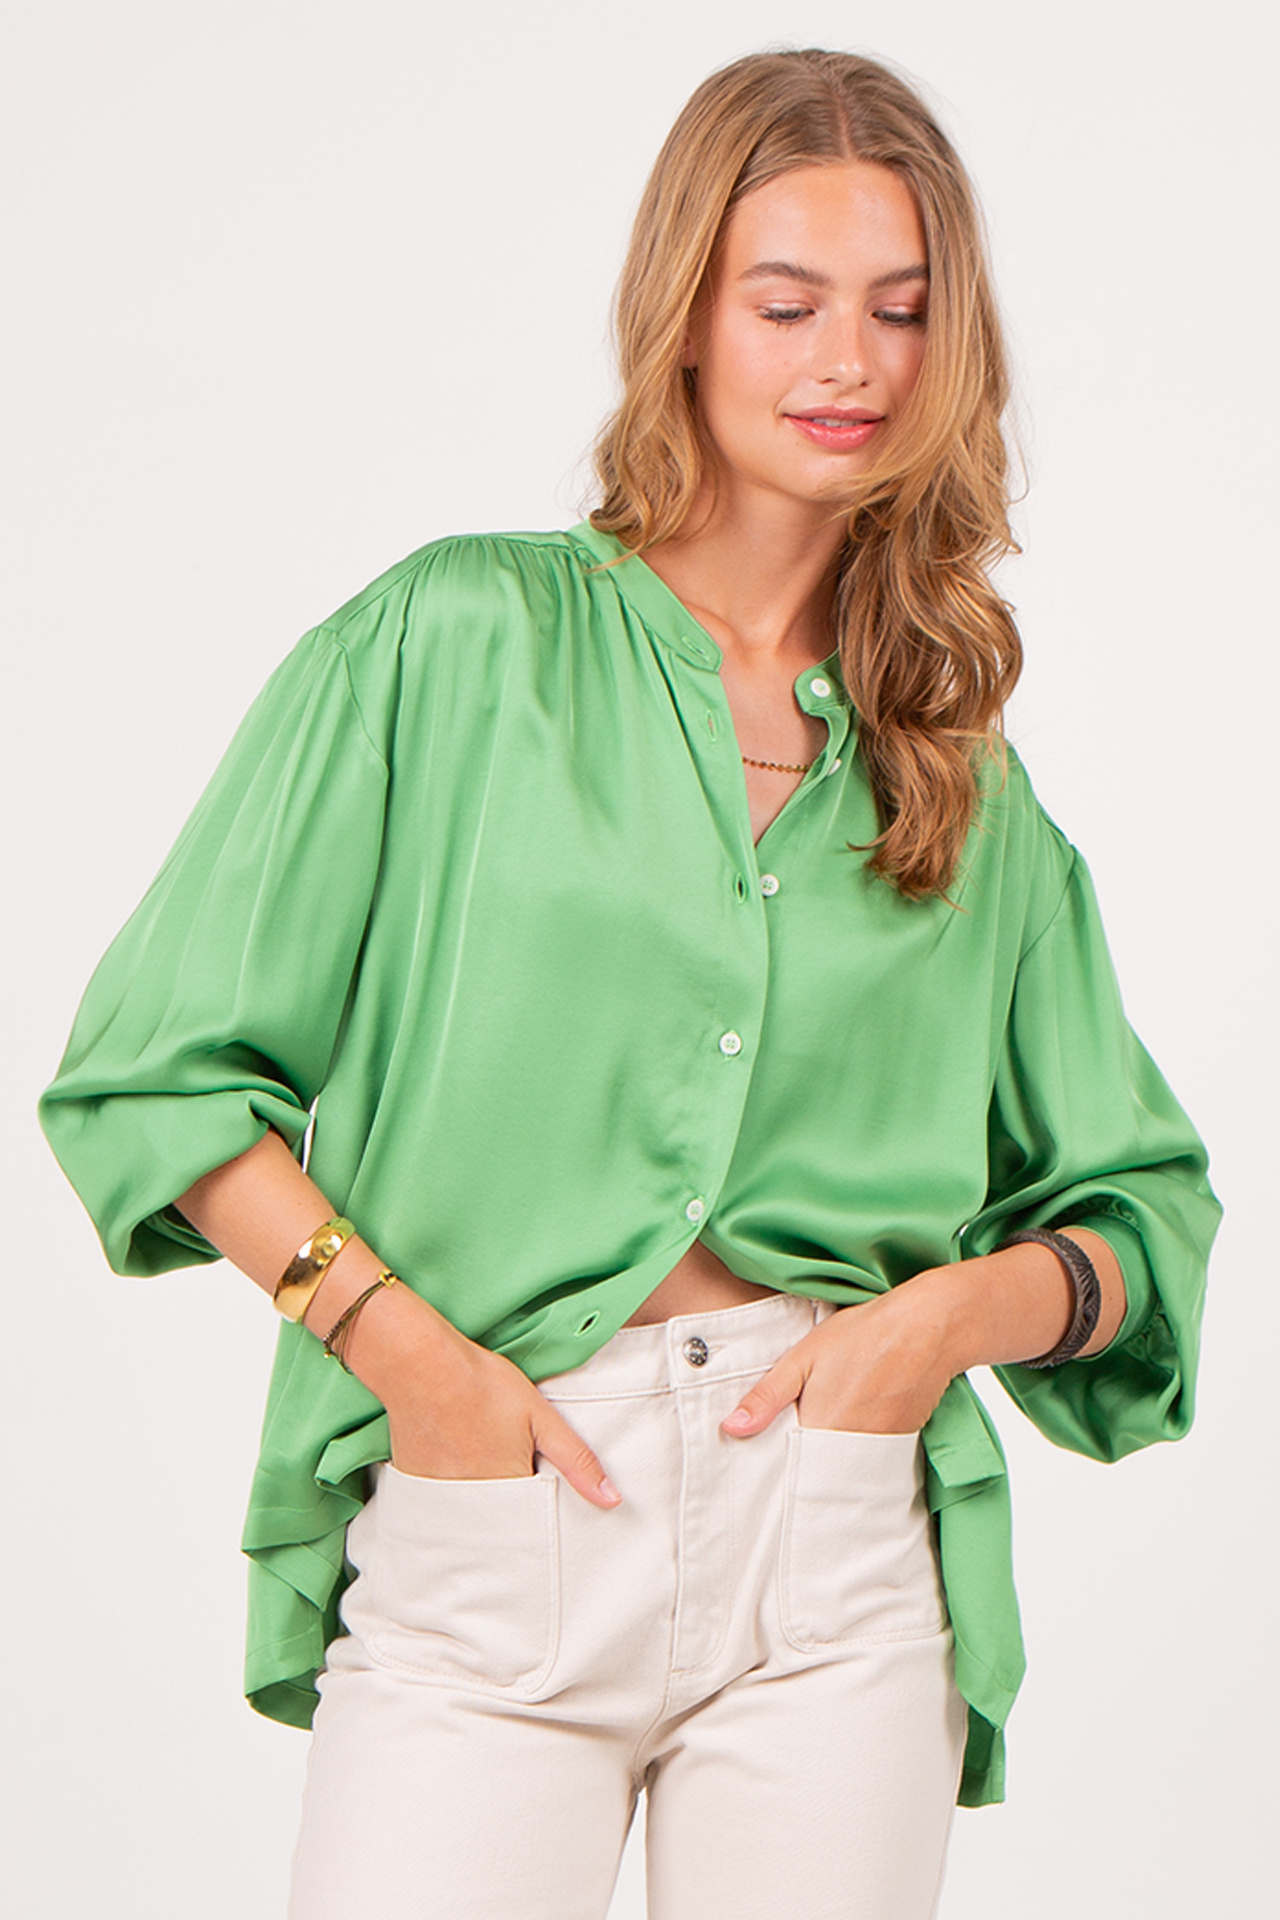 groene blouse - Nathalie